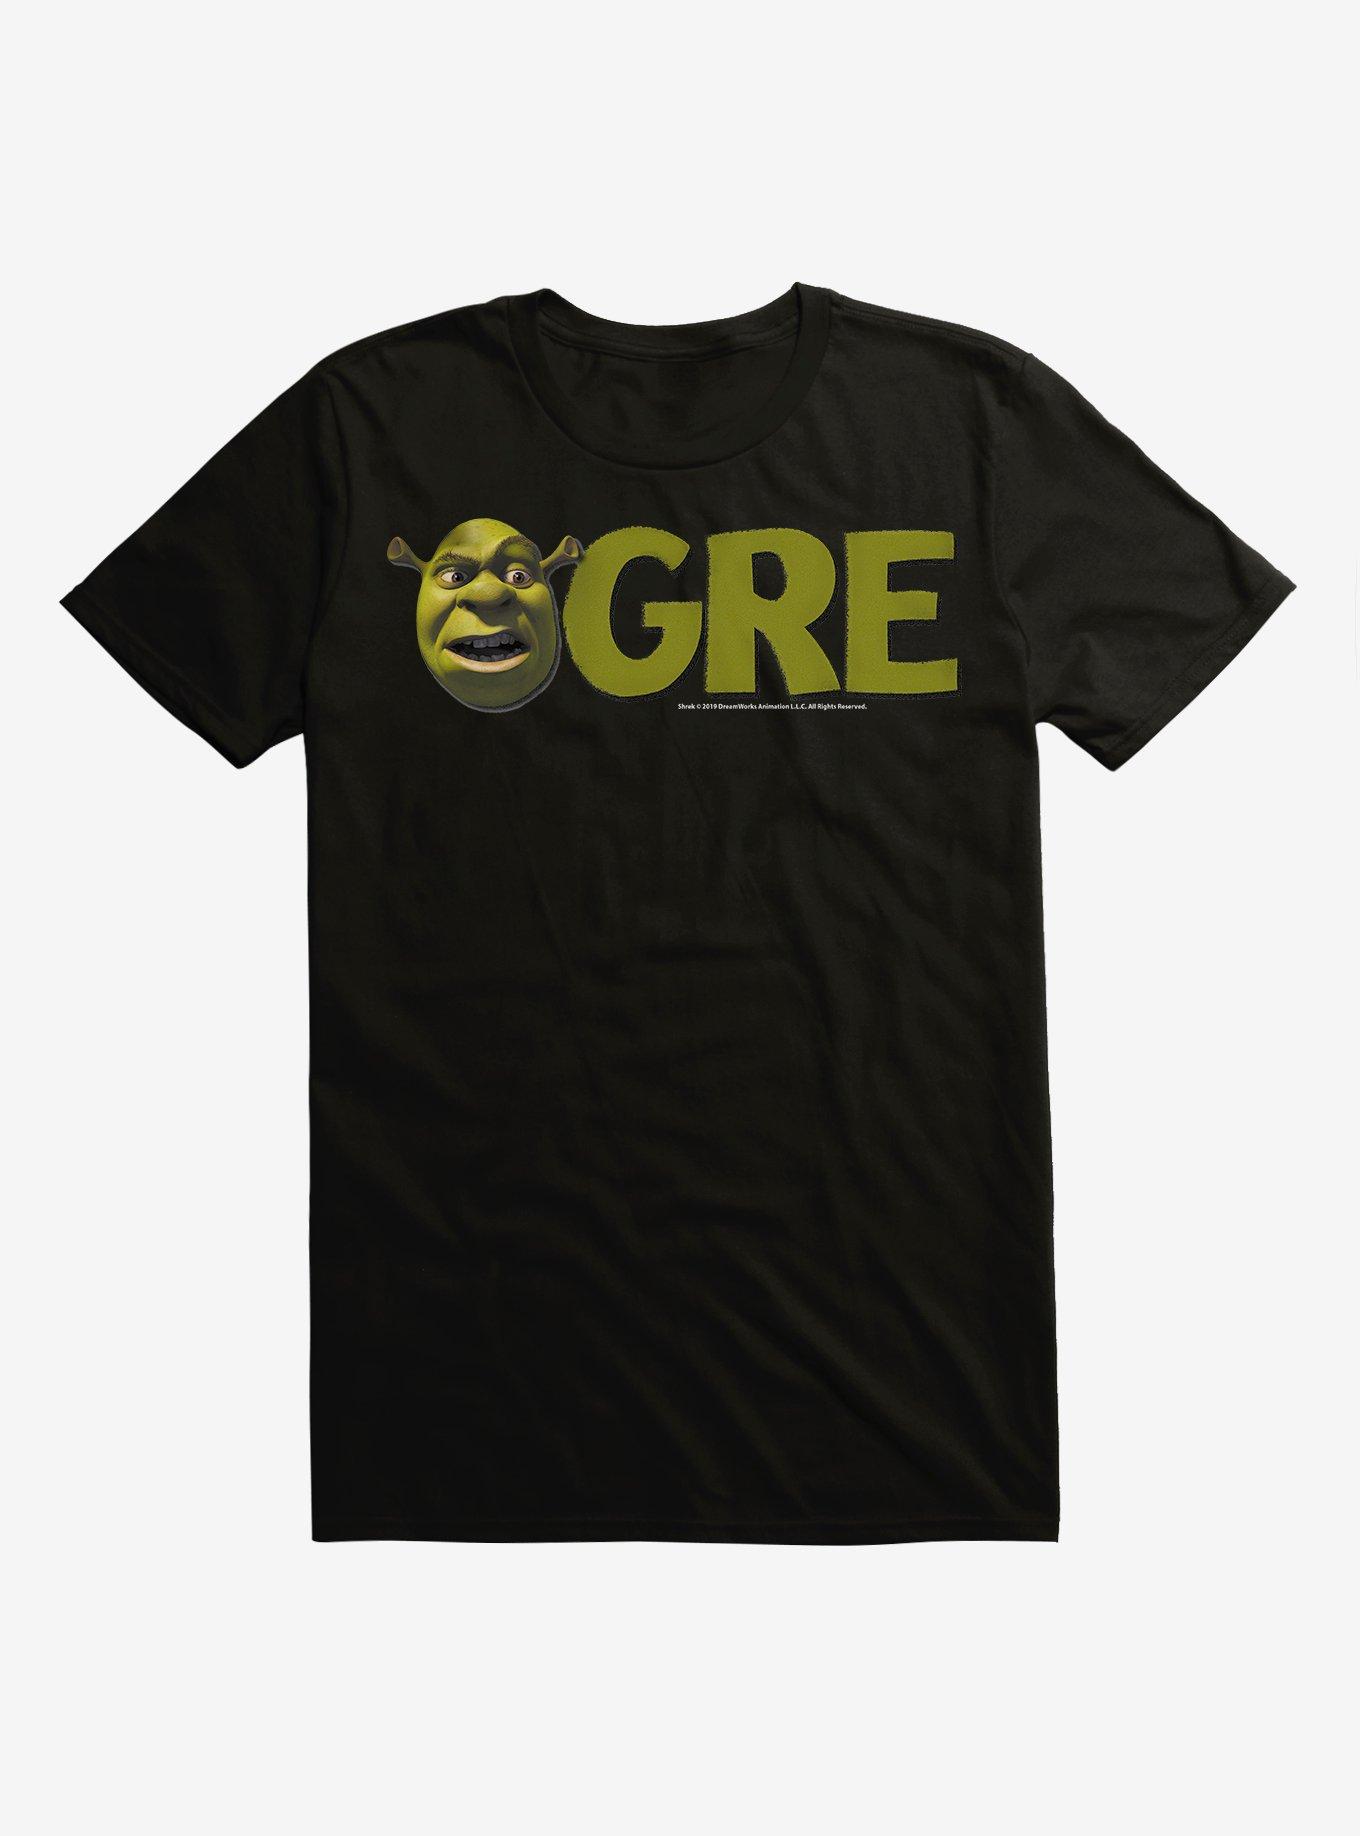 Shrek Ogre Word T-Shirt, , hi-res